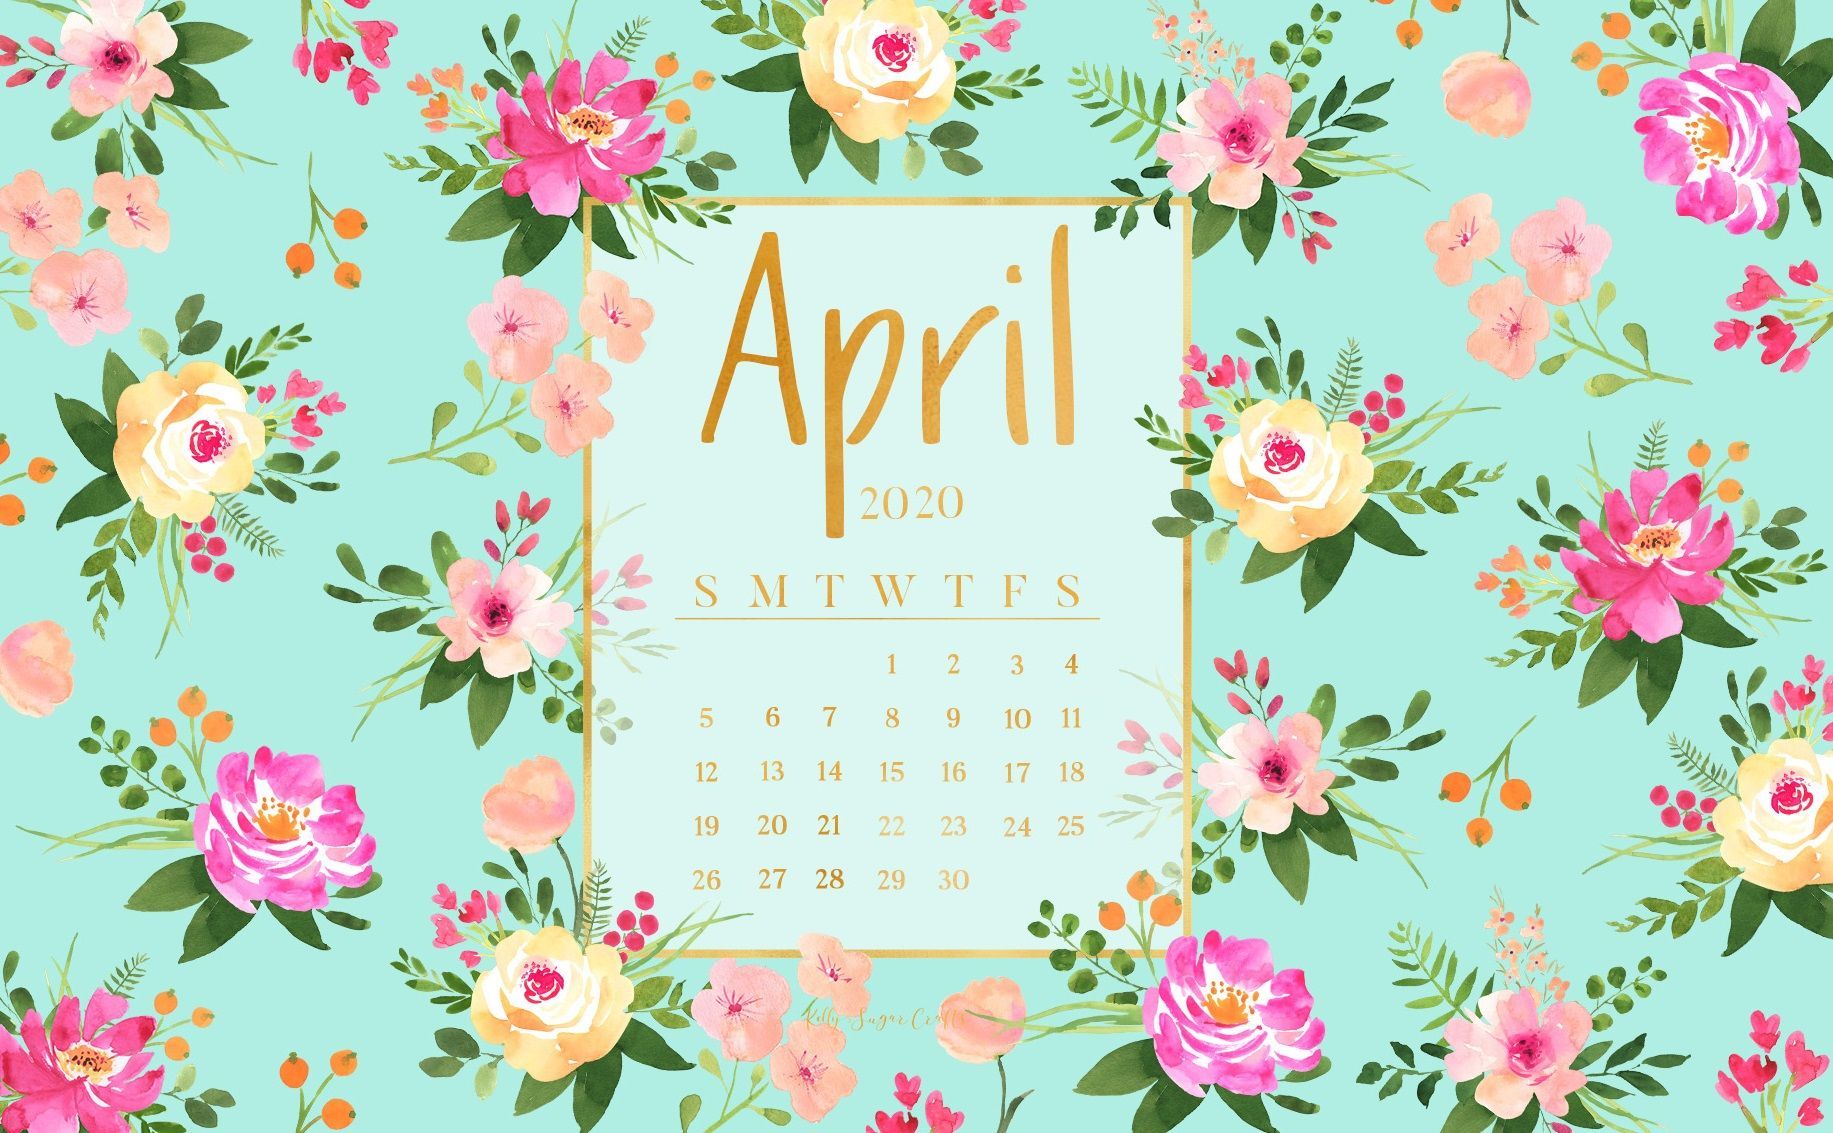 April 2020 Wallpaper Calendar. Calendar wallpaper